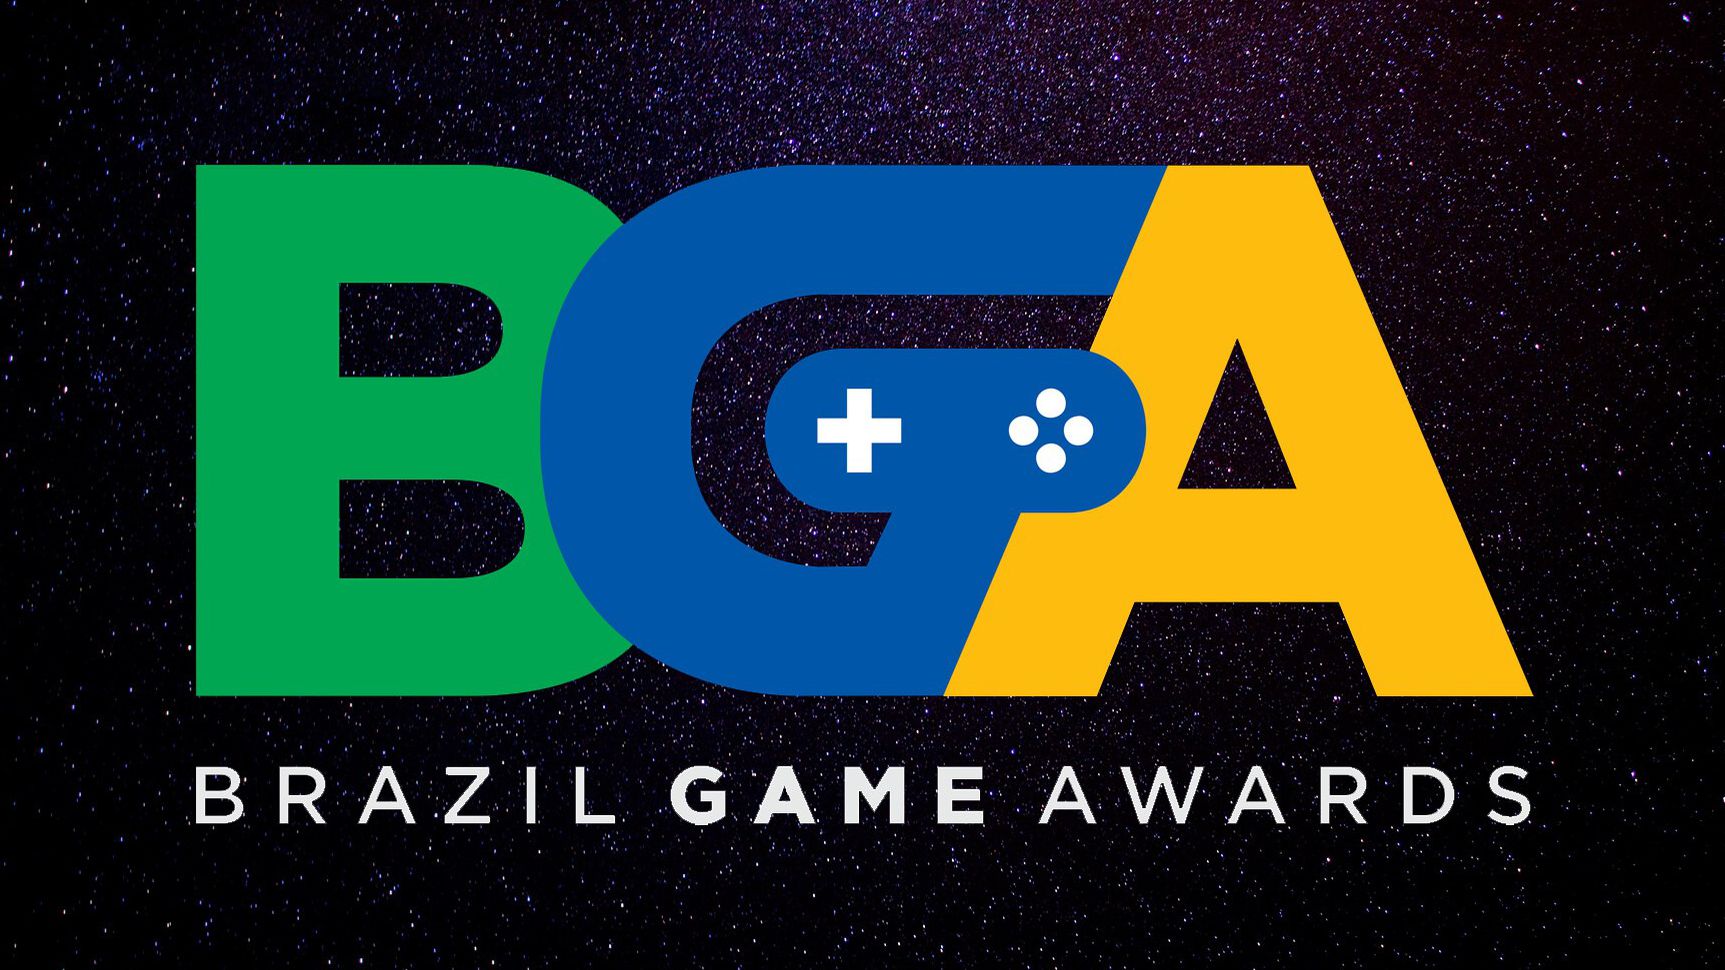 Dublagem de Assassin's Creed III já está disponível no Brasil - Canaltech